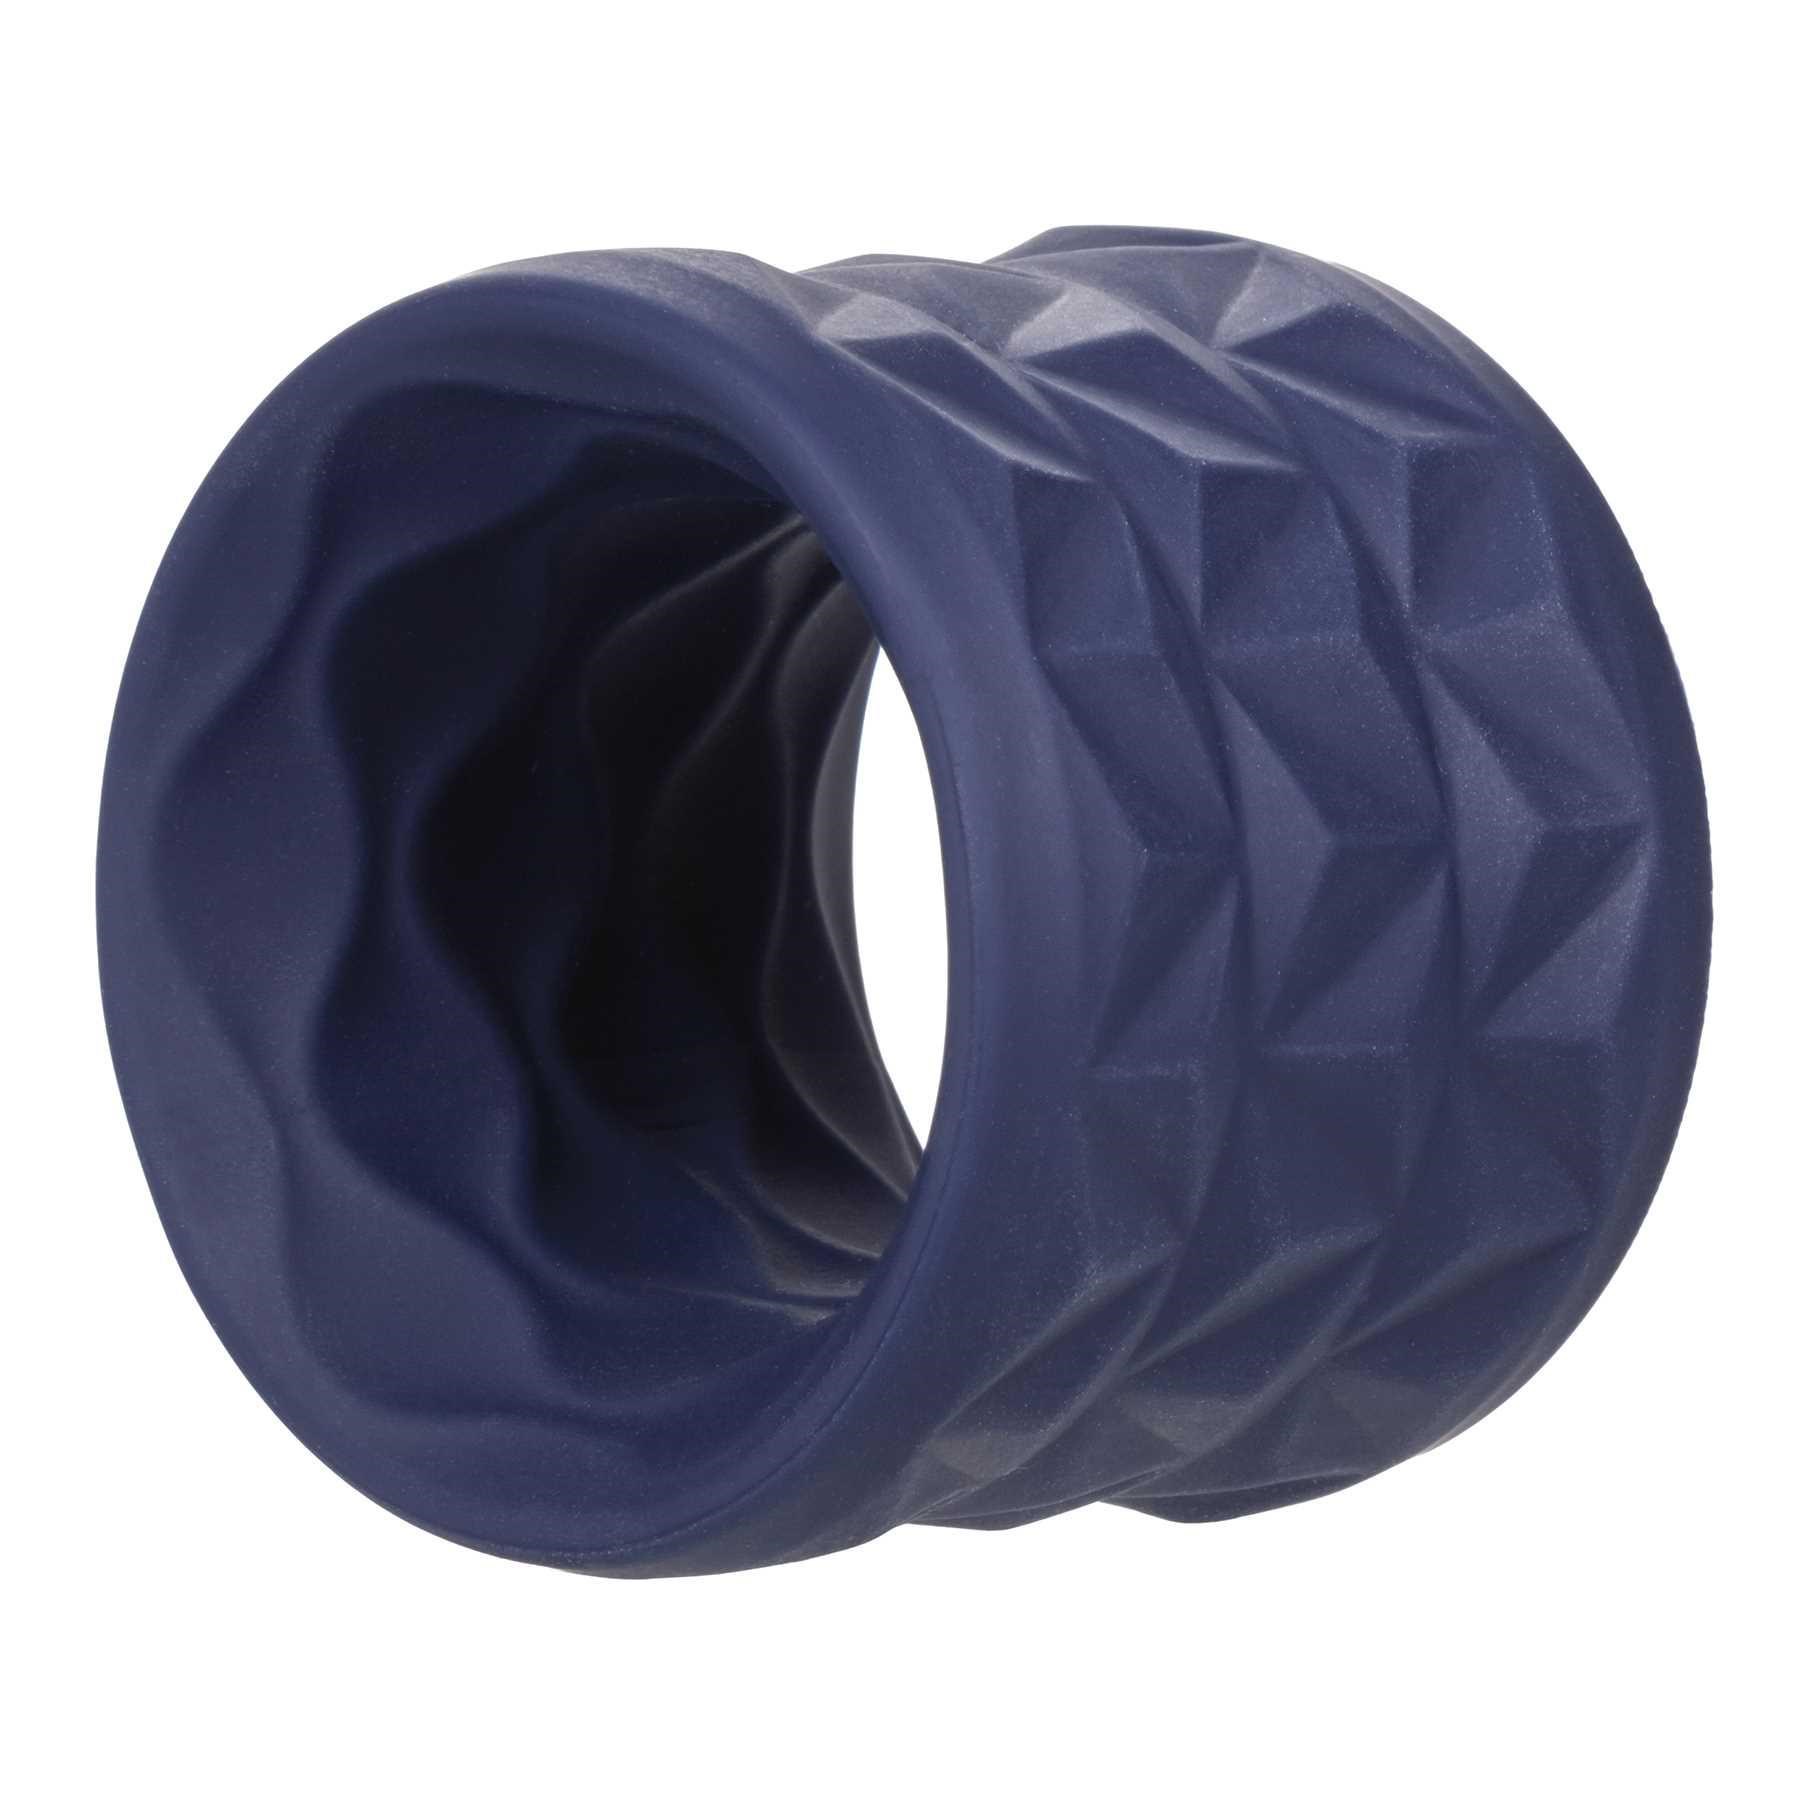 Viceroy Reverse Endurance Ring product image 5